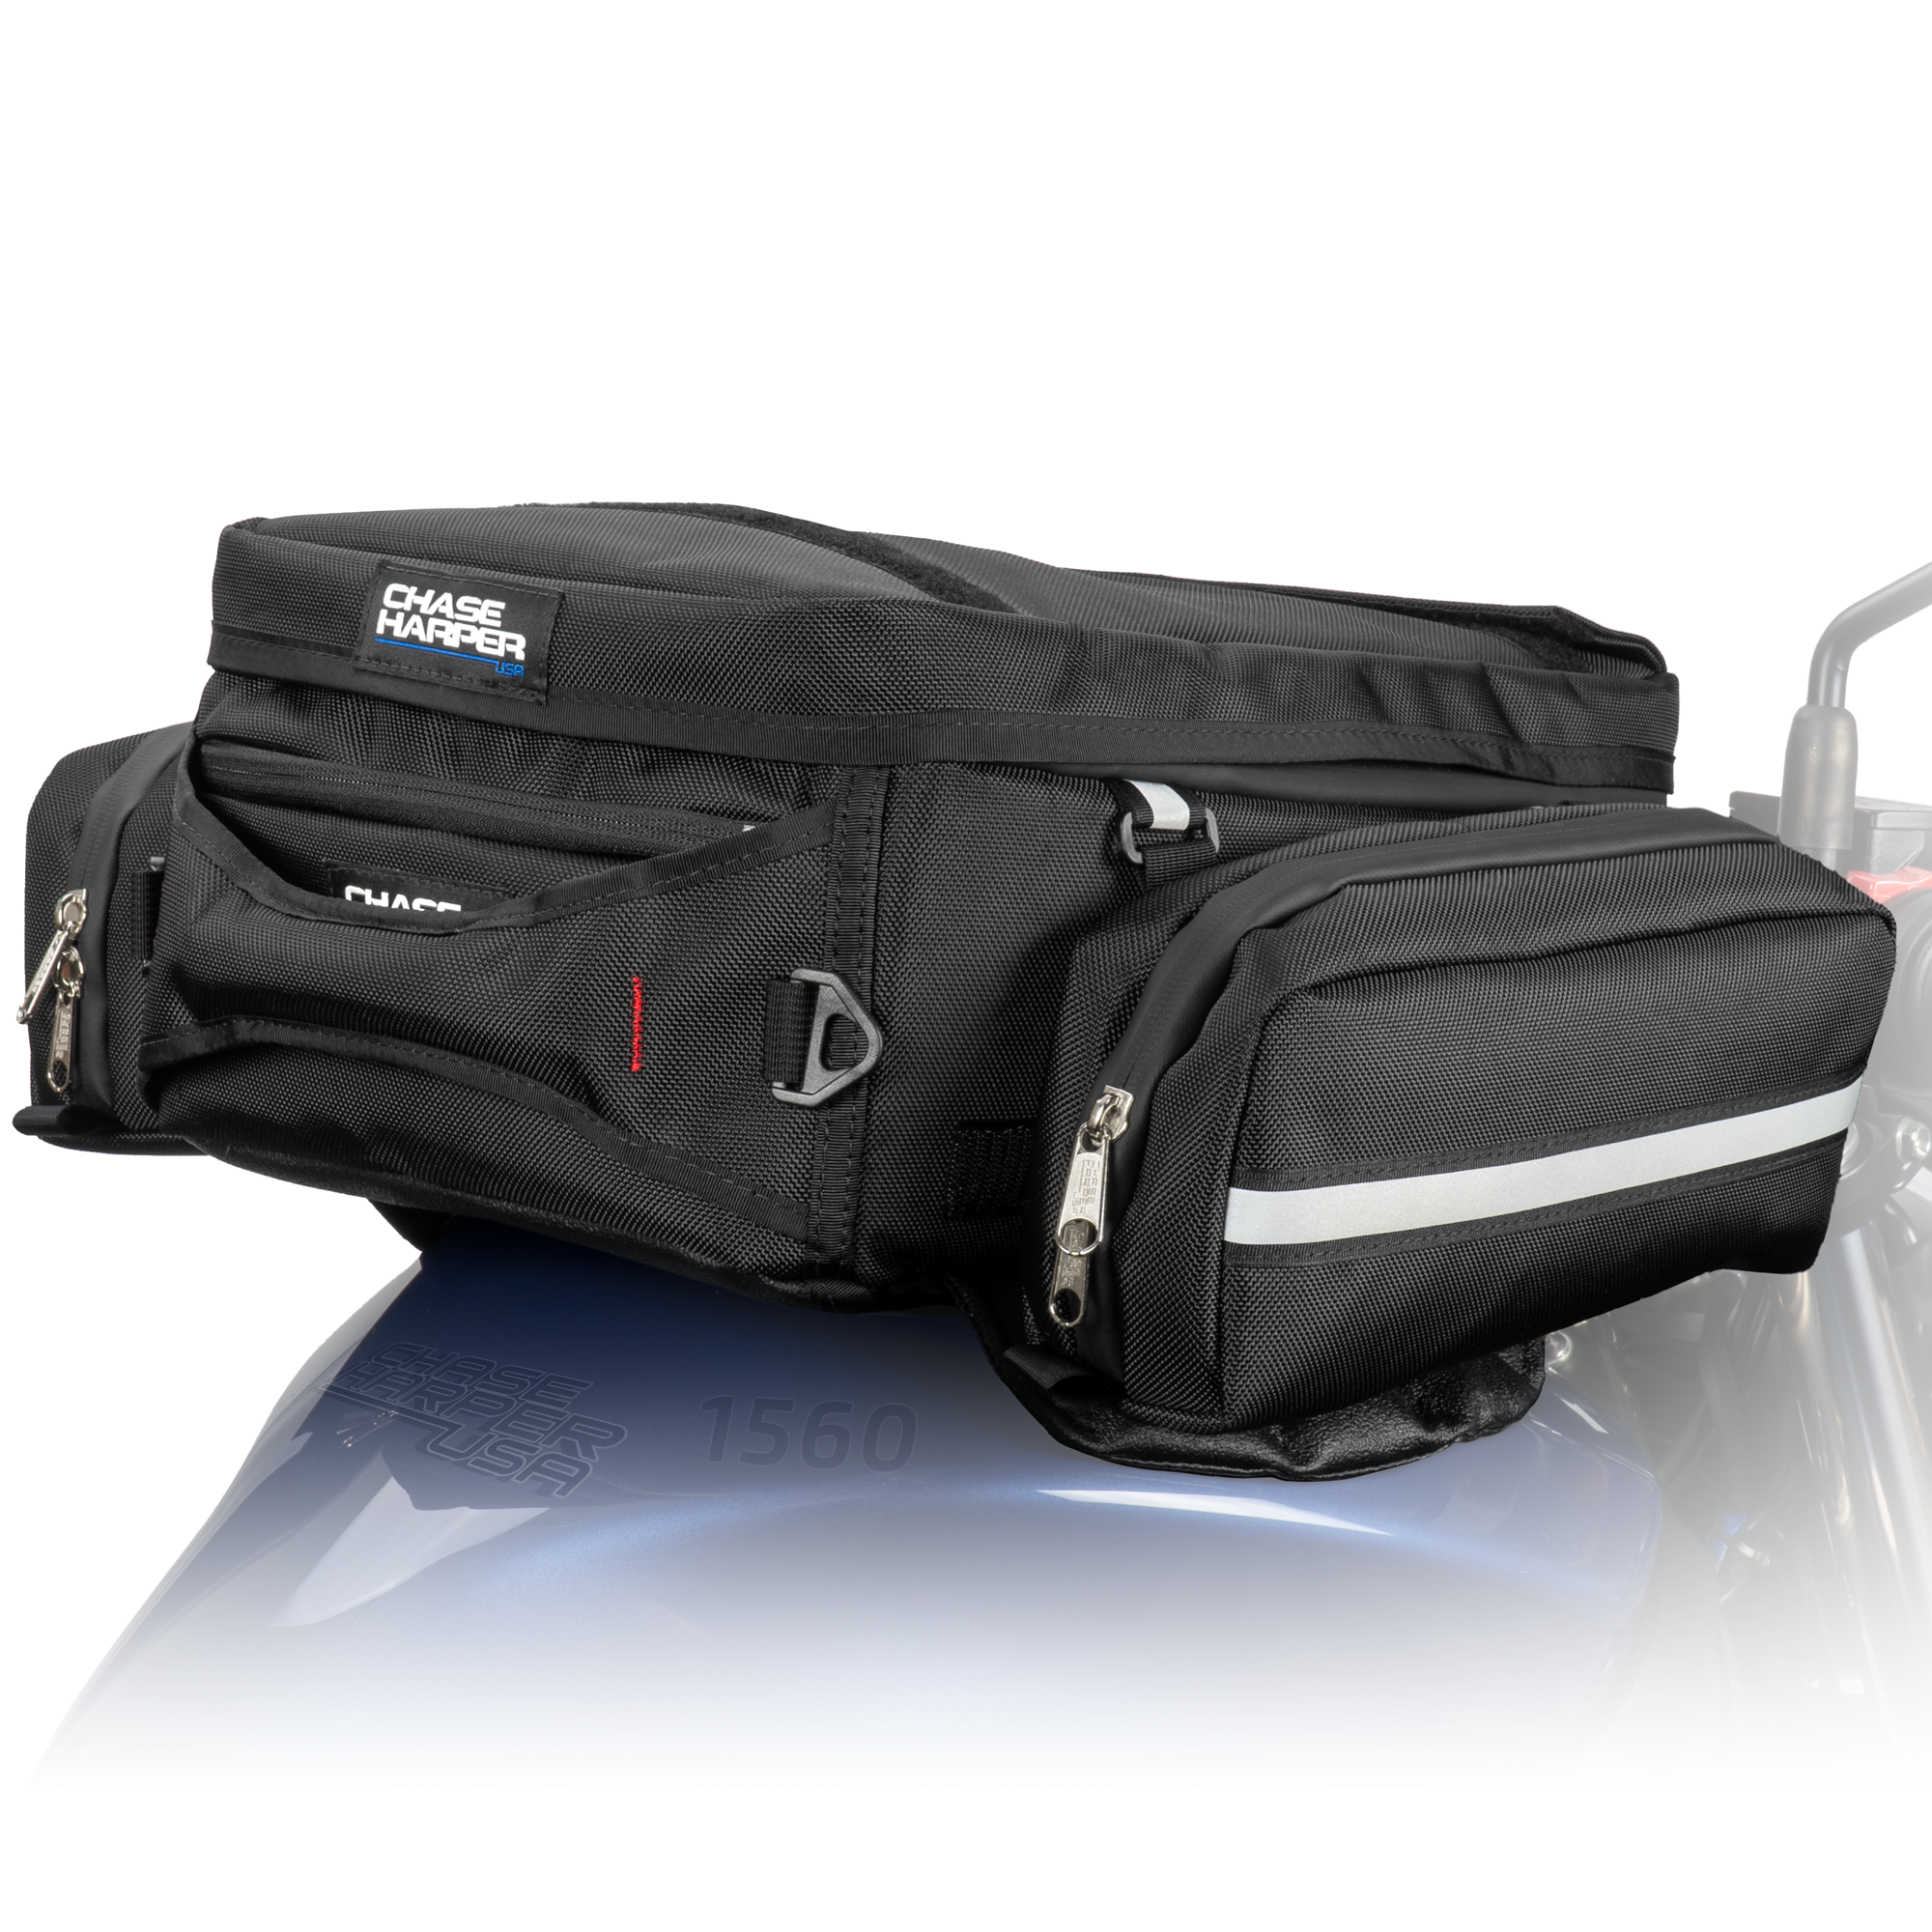 Tour Chase - Model Bag - Tank 1560 Harper USA Sport 2020